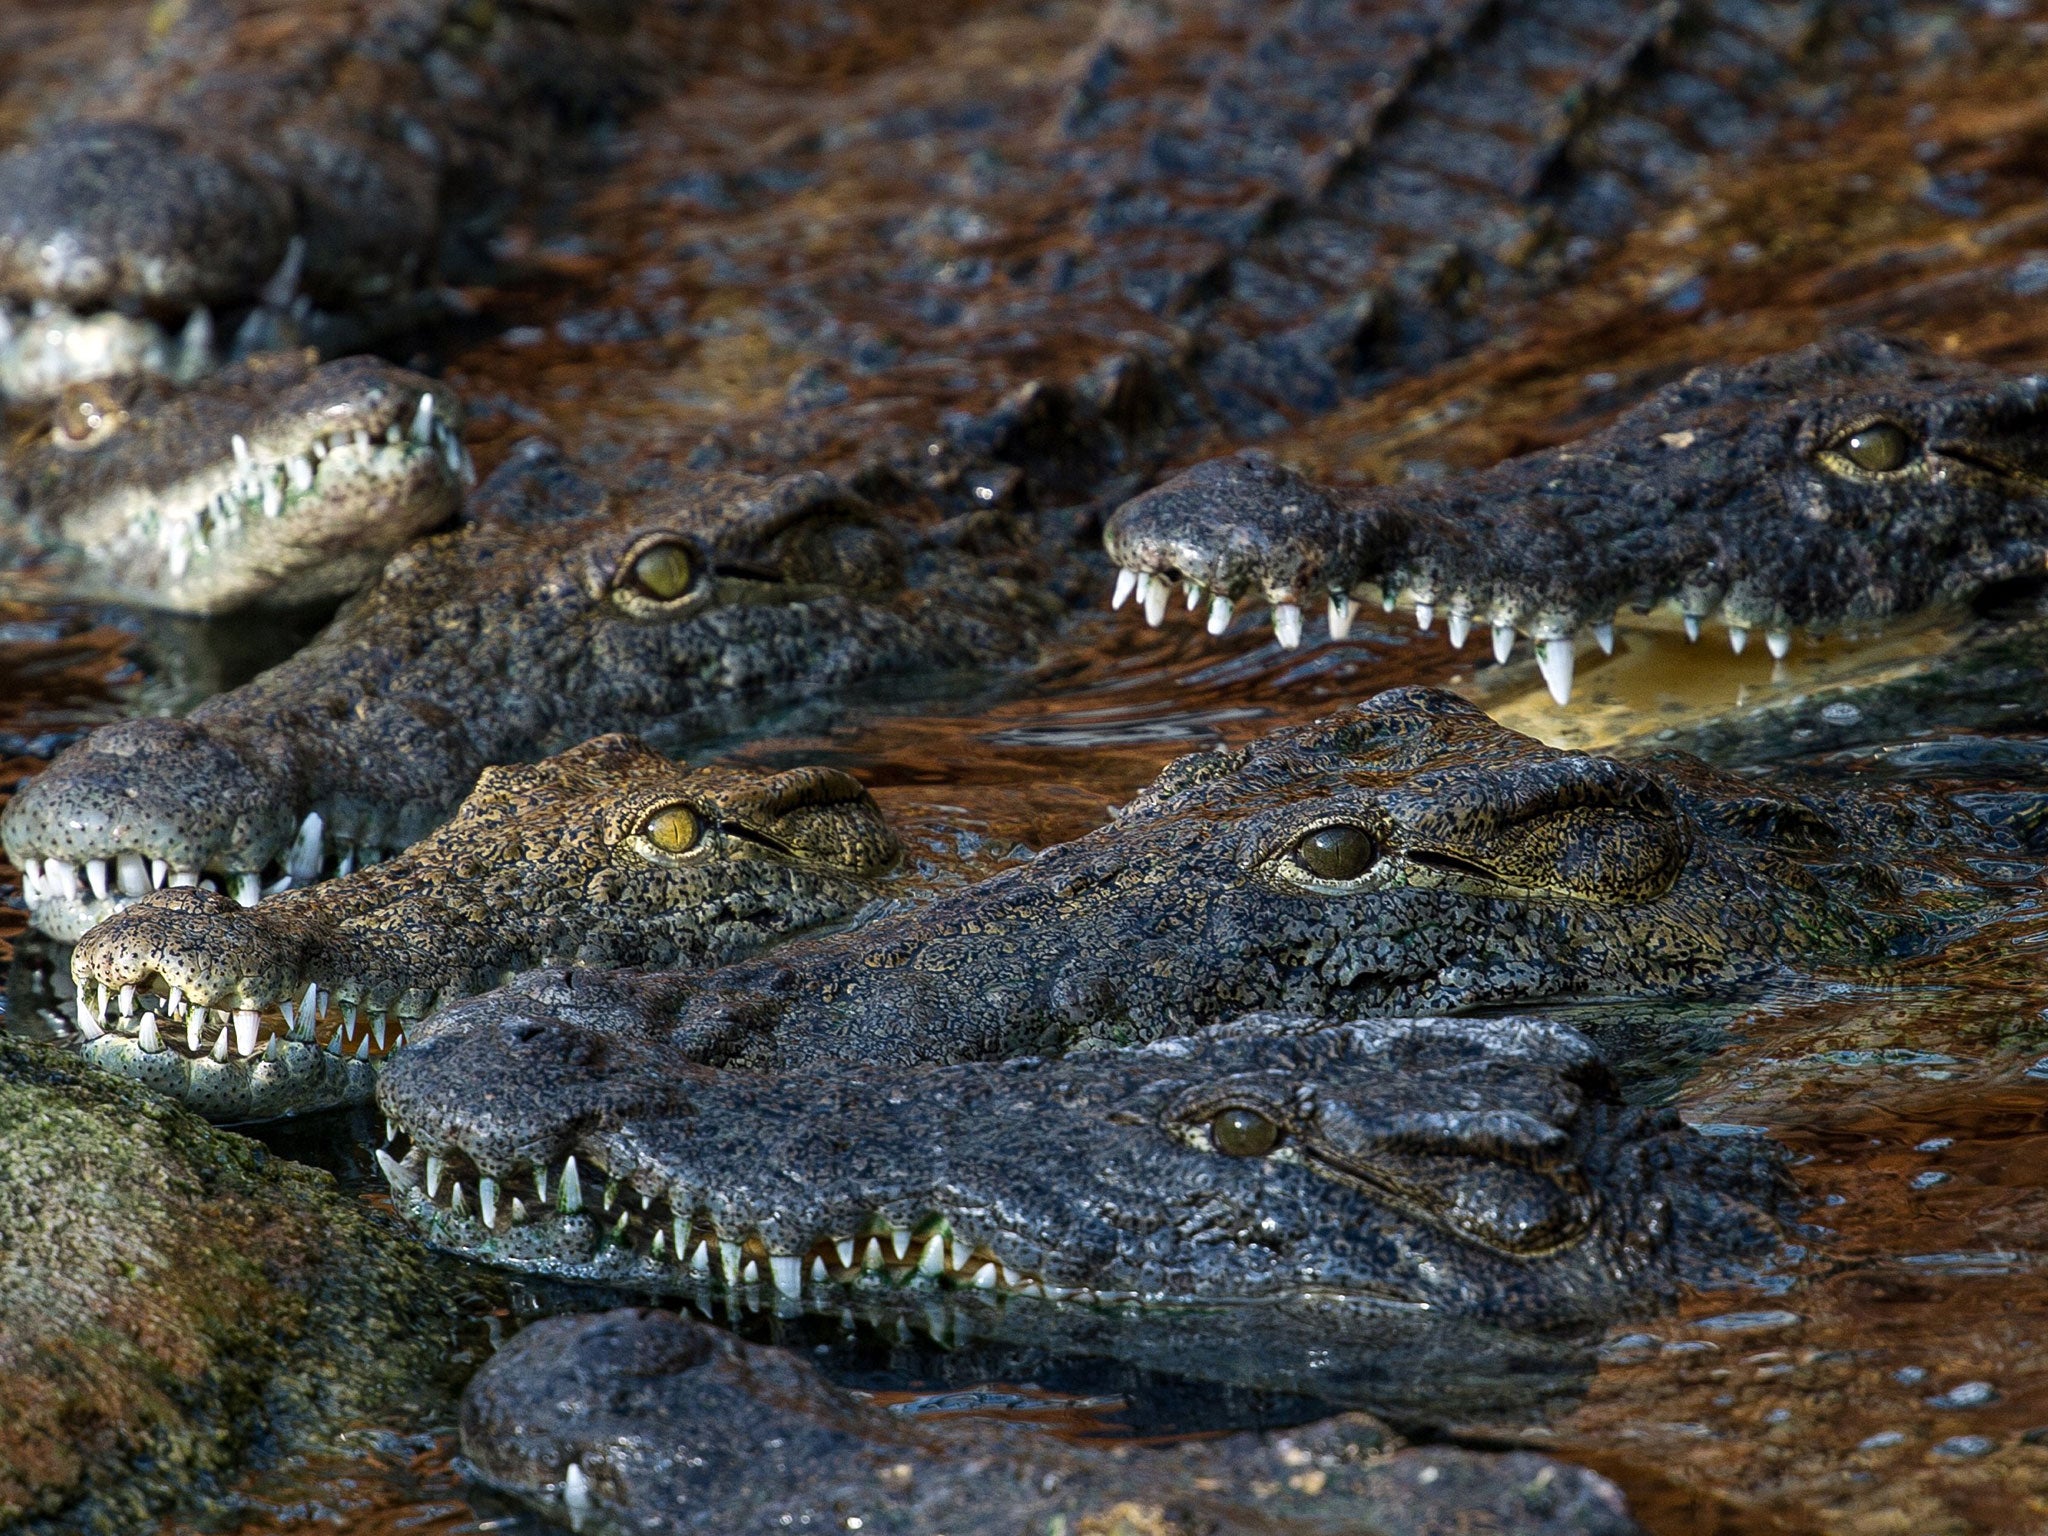 The farm houses more than 1000 crocodiles